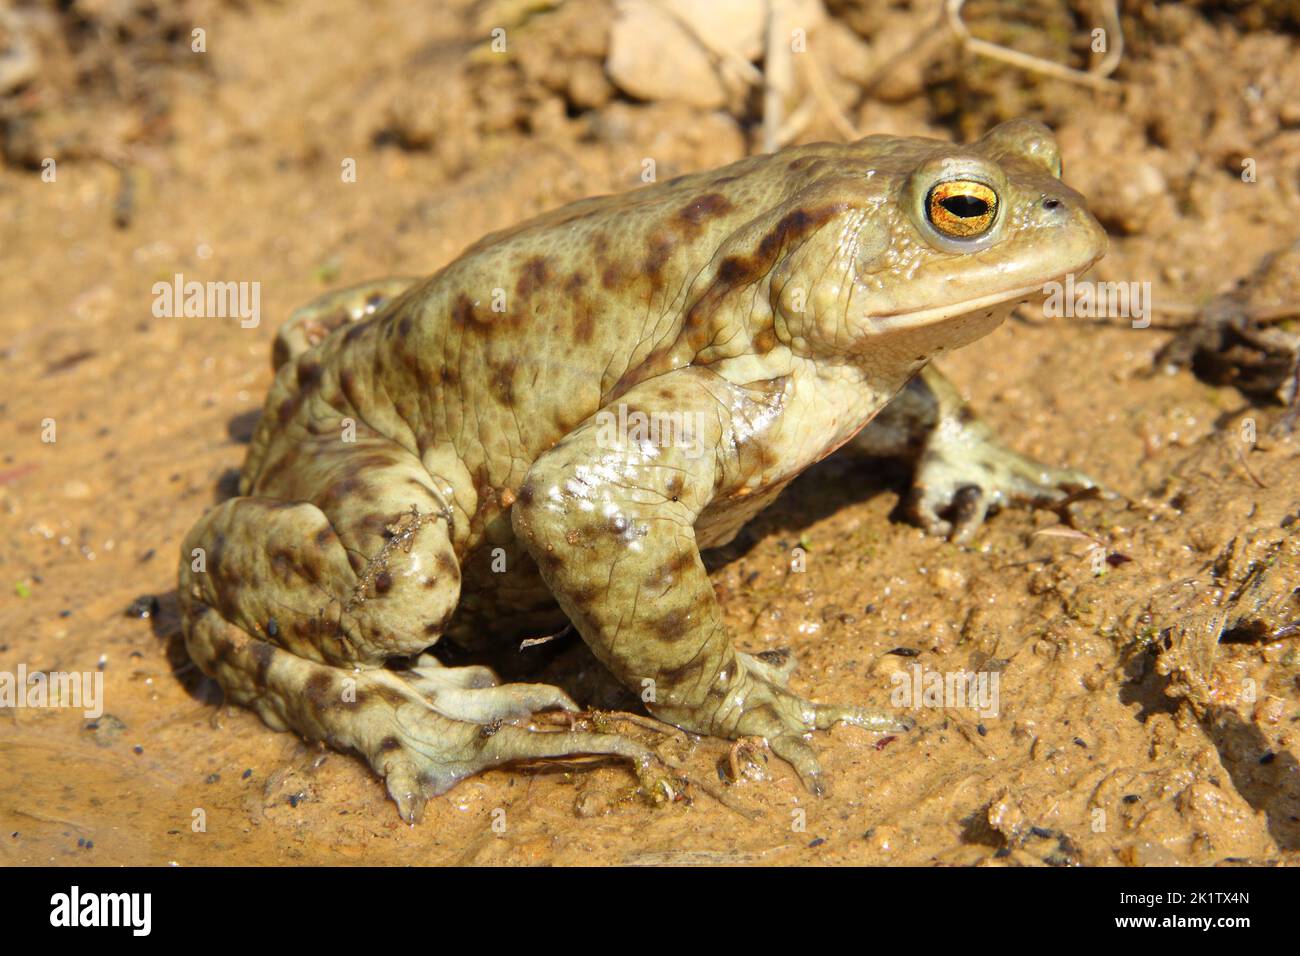 European Common toad (Bufo bufo) in a natural habitat Stock Photo